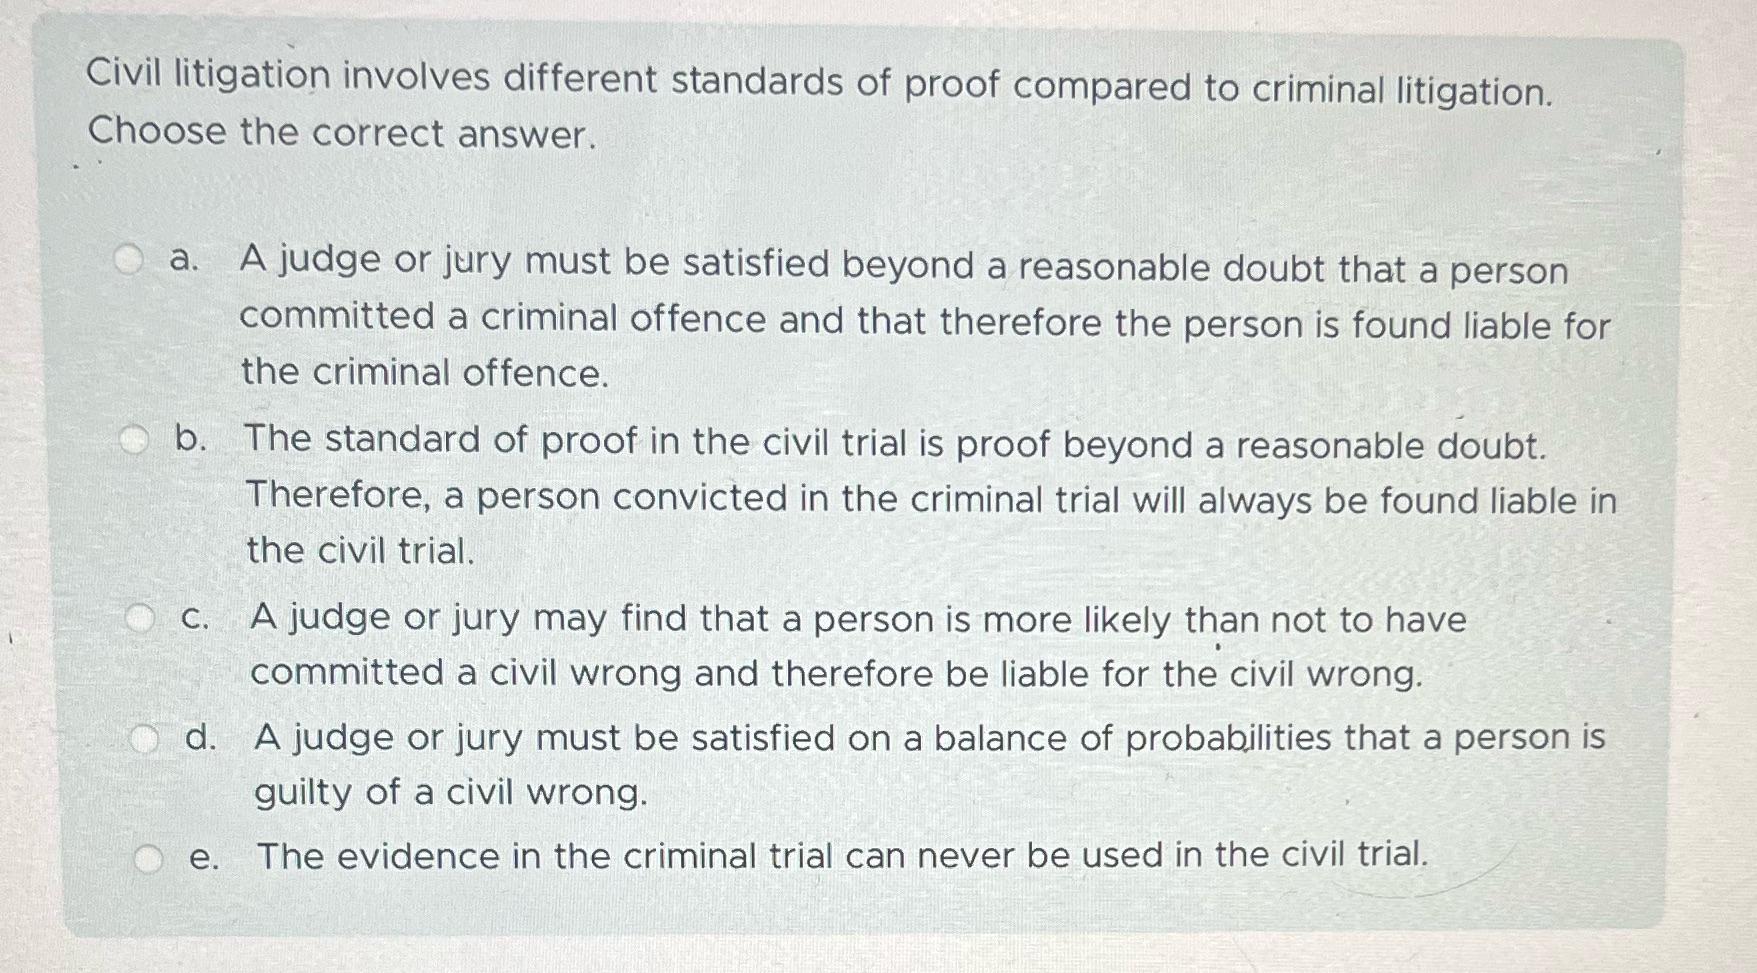 Civil litigation involves different standards of proof compared to criminal litigation. Choose the correct